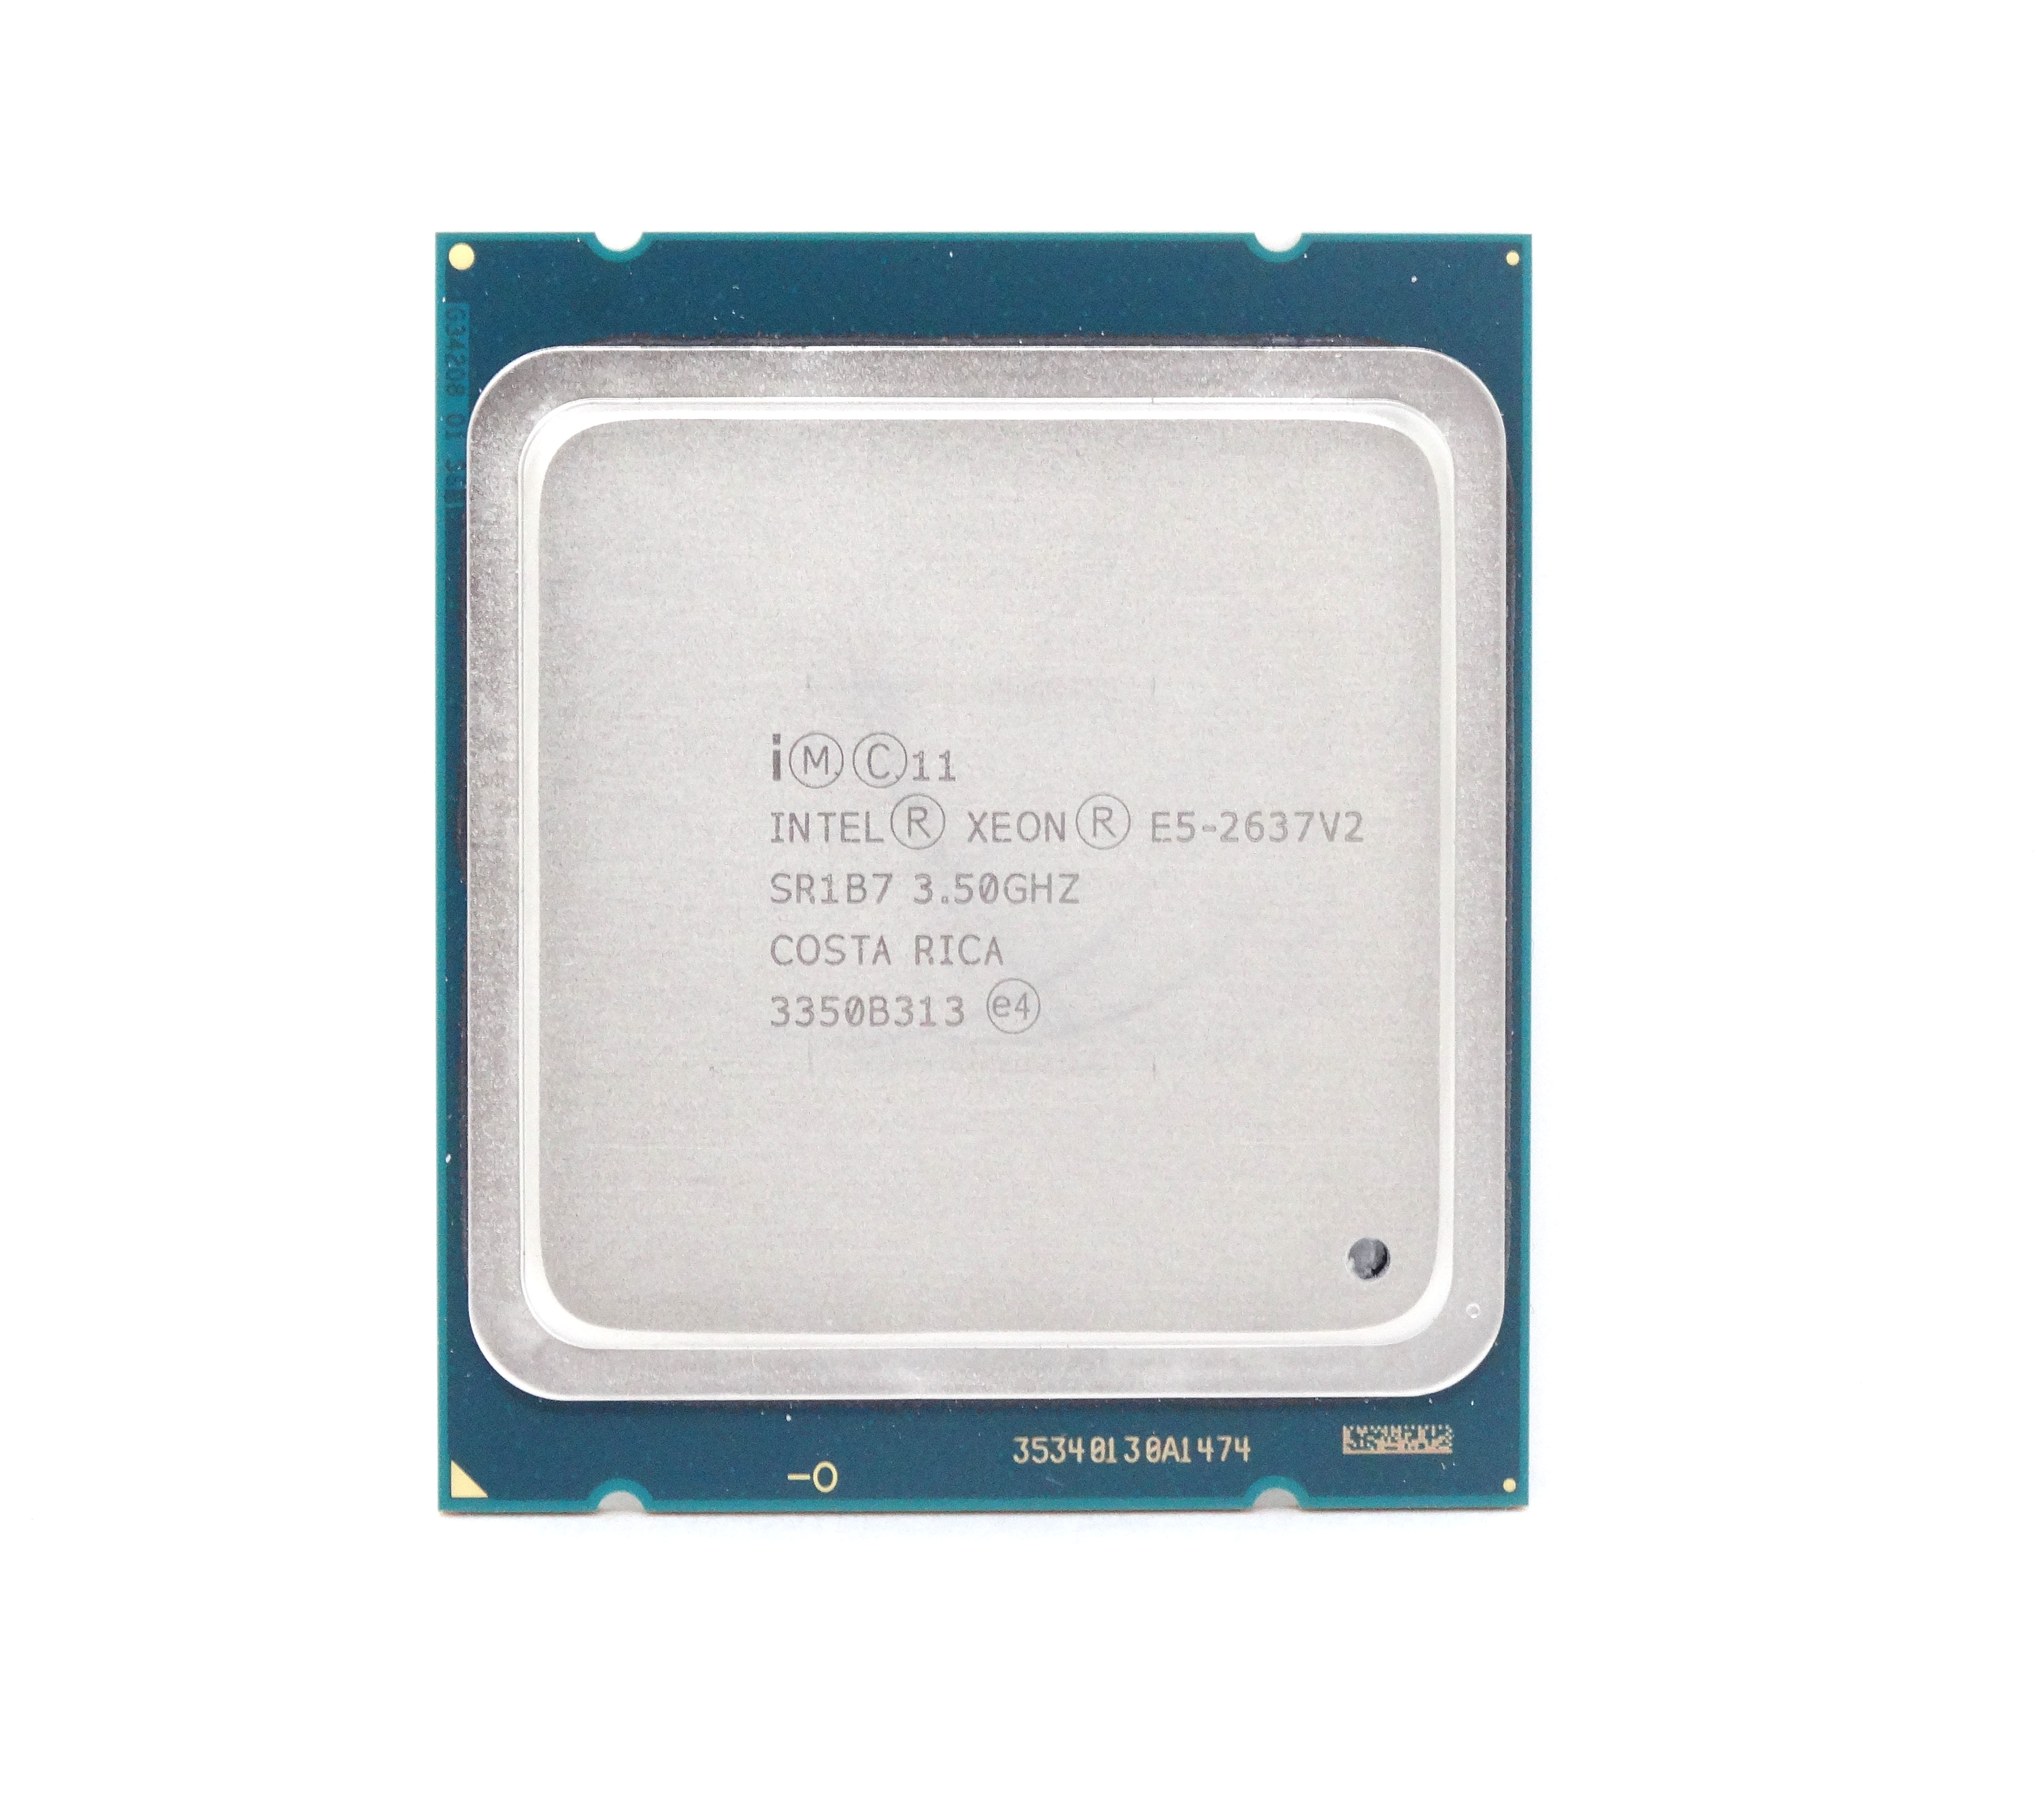 Intel Xeon E5-2637 v2 3.50GHz Quad Core 15MB LGA2011 CPU Processor (SR1B7)